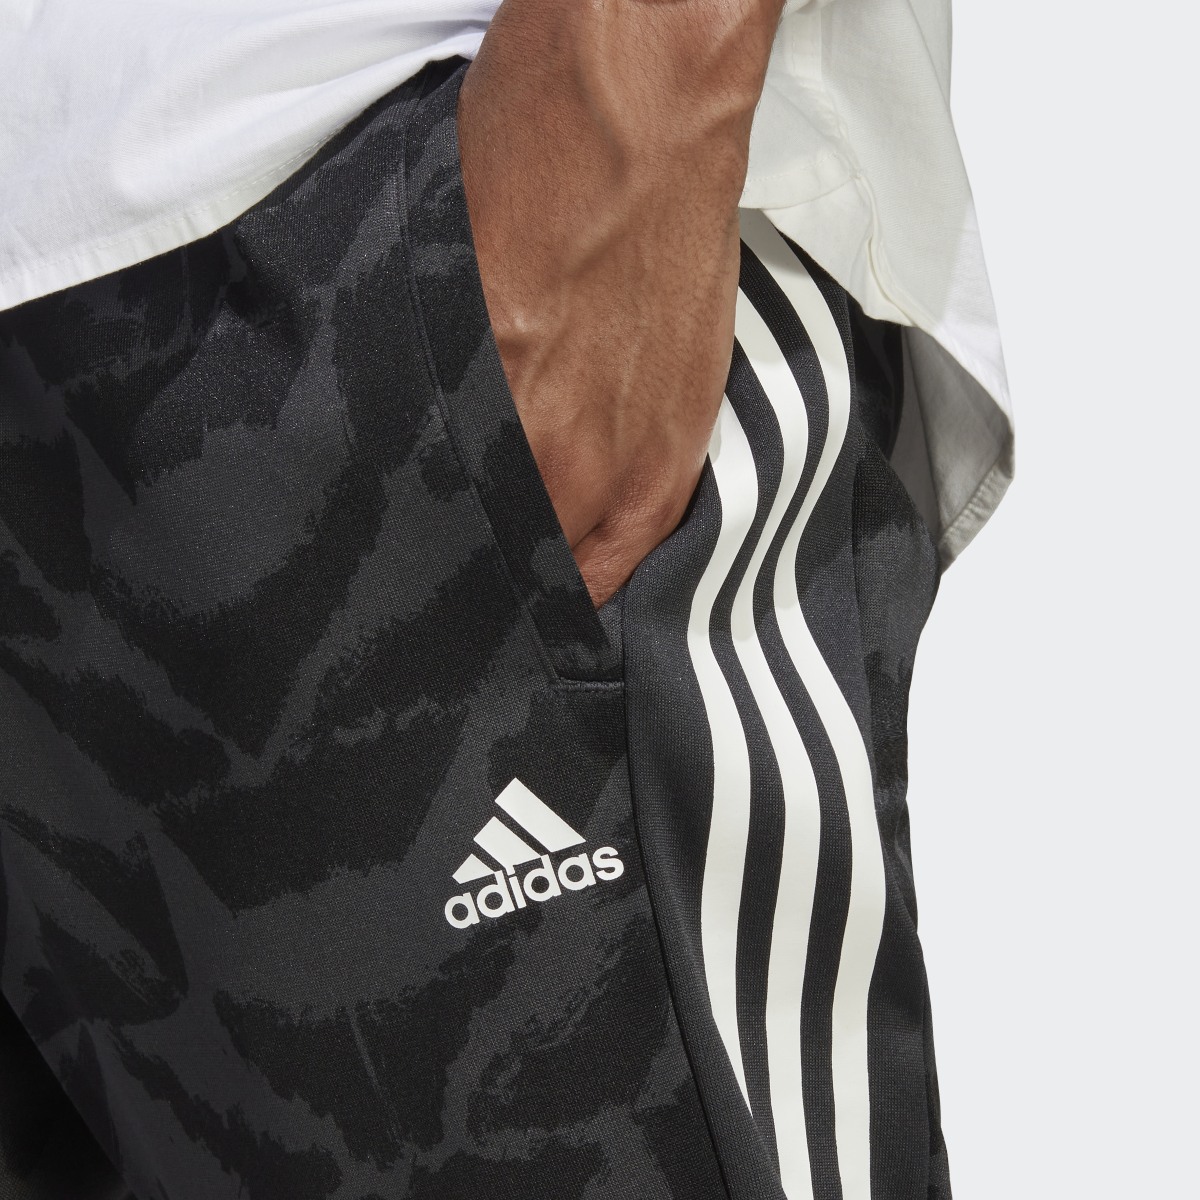 Adidas Pants Deportivos Tiro Suit-Up Lifestyle. 6